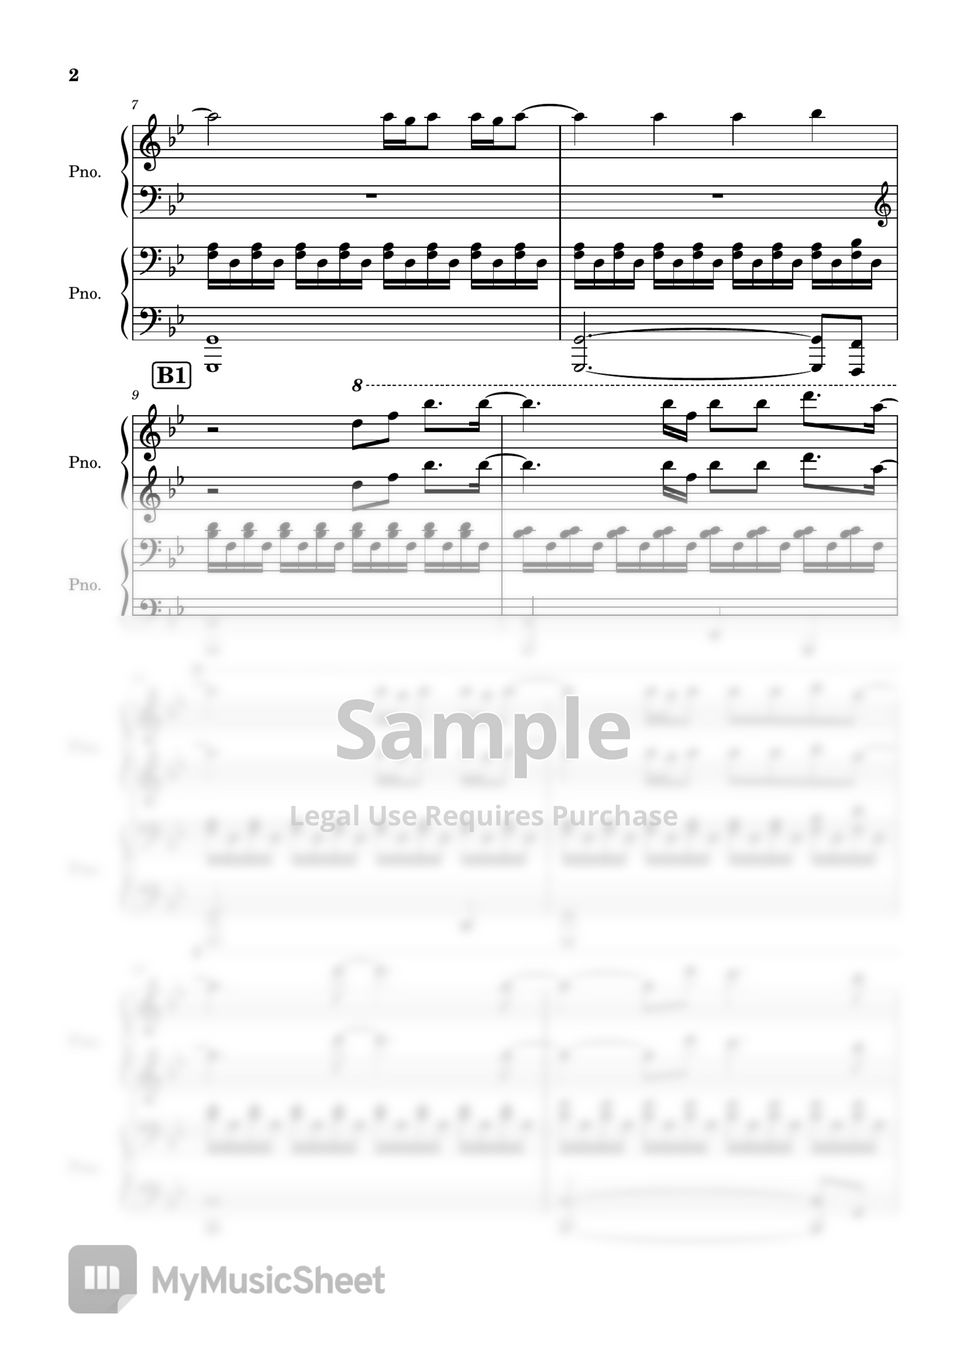 Edan呂爵安 - E先生連環不幸事件 (Piano 4hands) by theBottlePiano